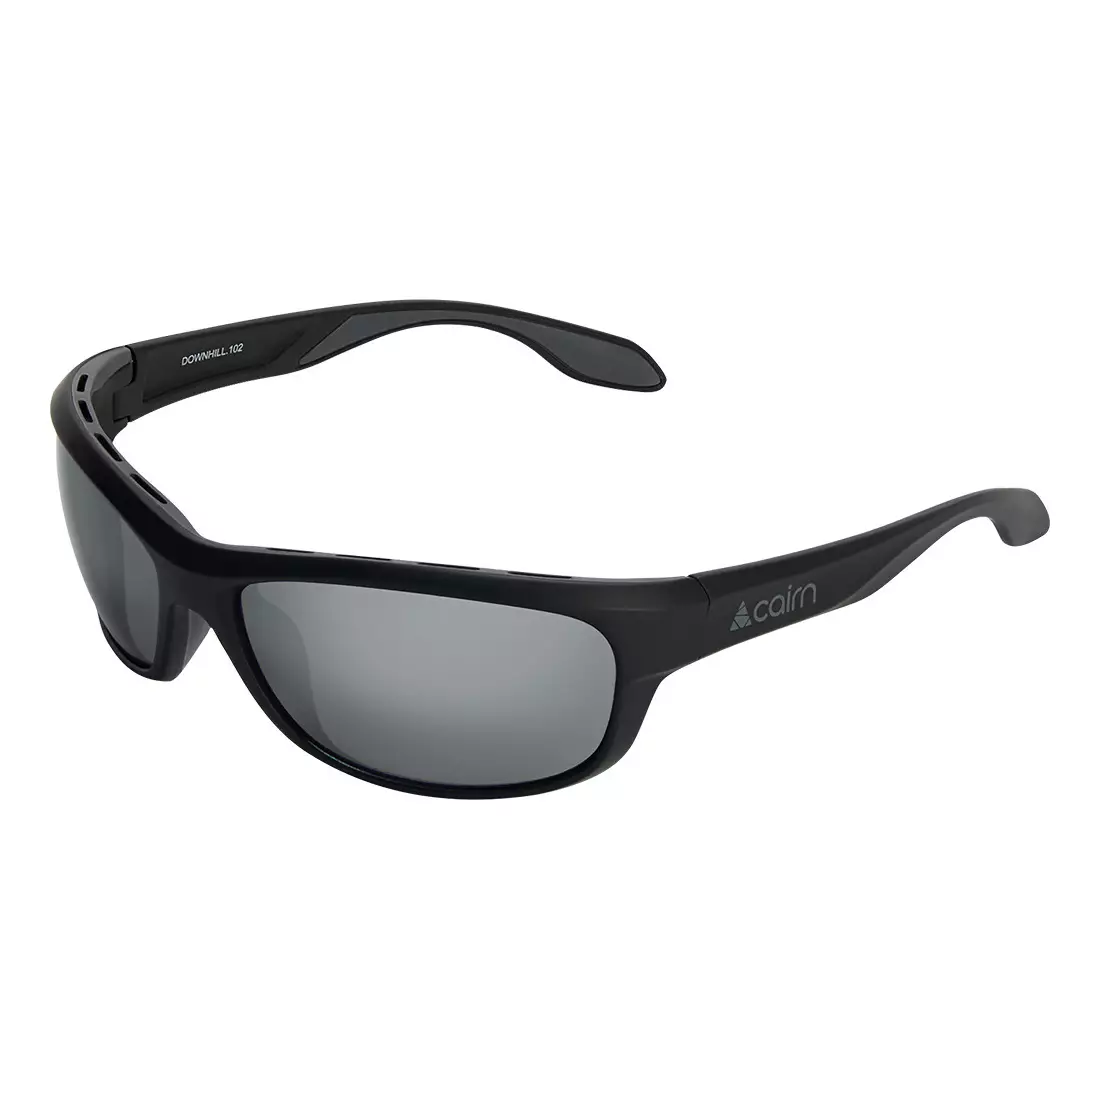 CAIRN Photochromic sports glasses DOWNHILL 102 PHOTOCHROM, black CPDOWNHILL102